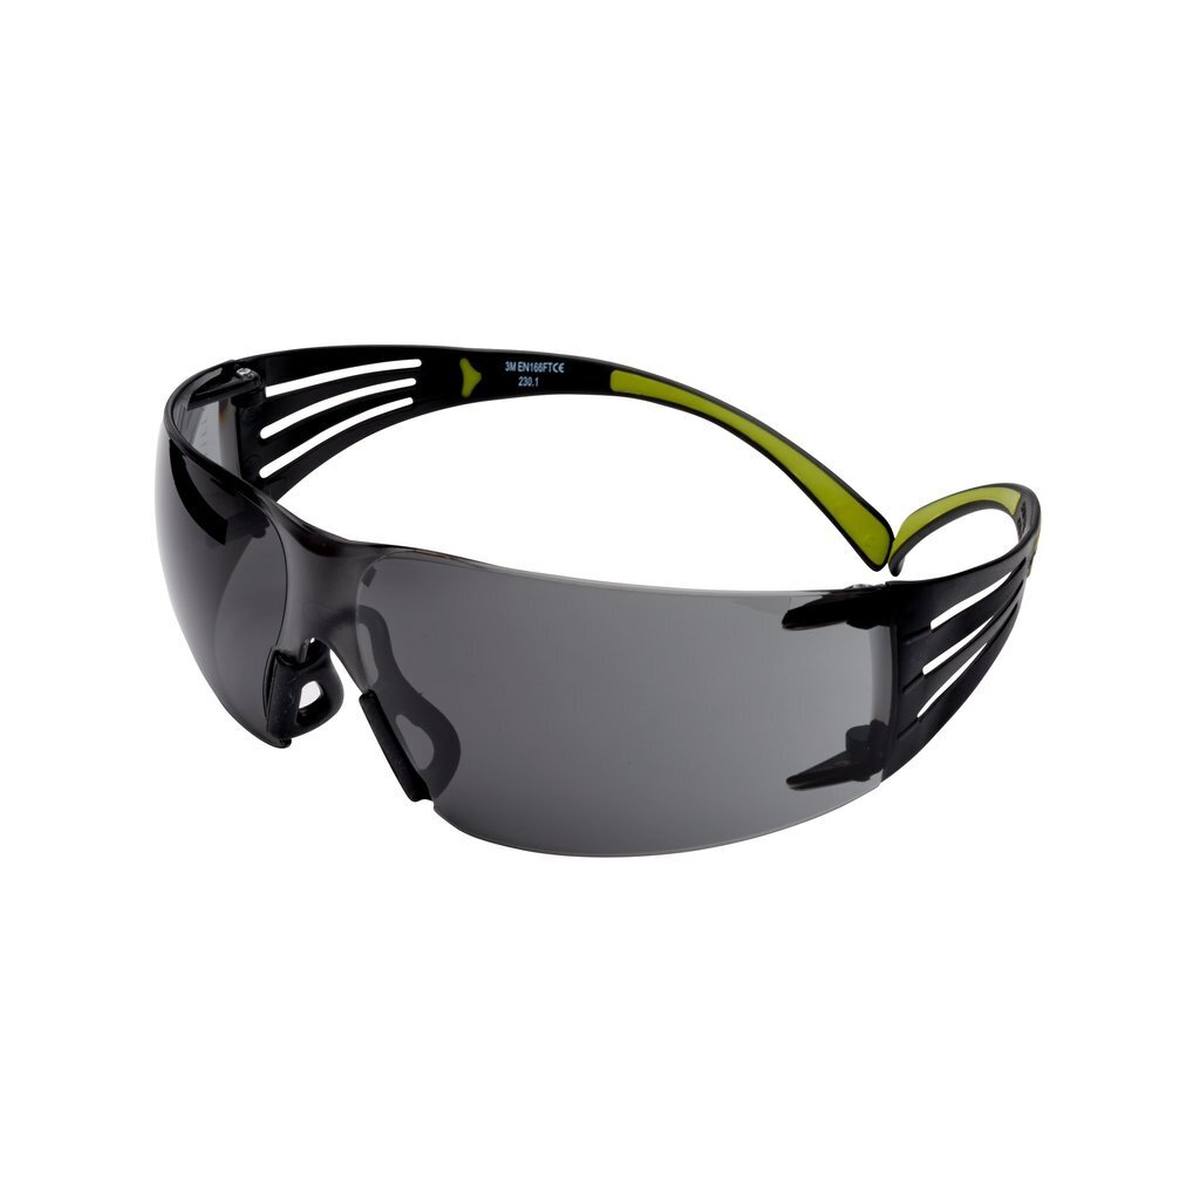 3M SecureFit 400 Schutzbrille, schwarze/grüne Bügel, Antikratz-/Anti-Fog-Beschichtung, graue Scheibe, SF402AS/AF-EU